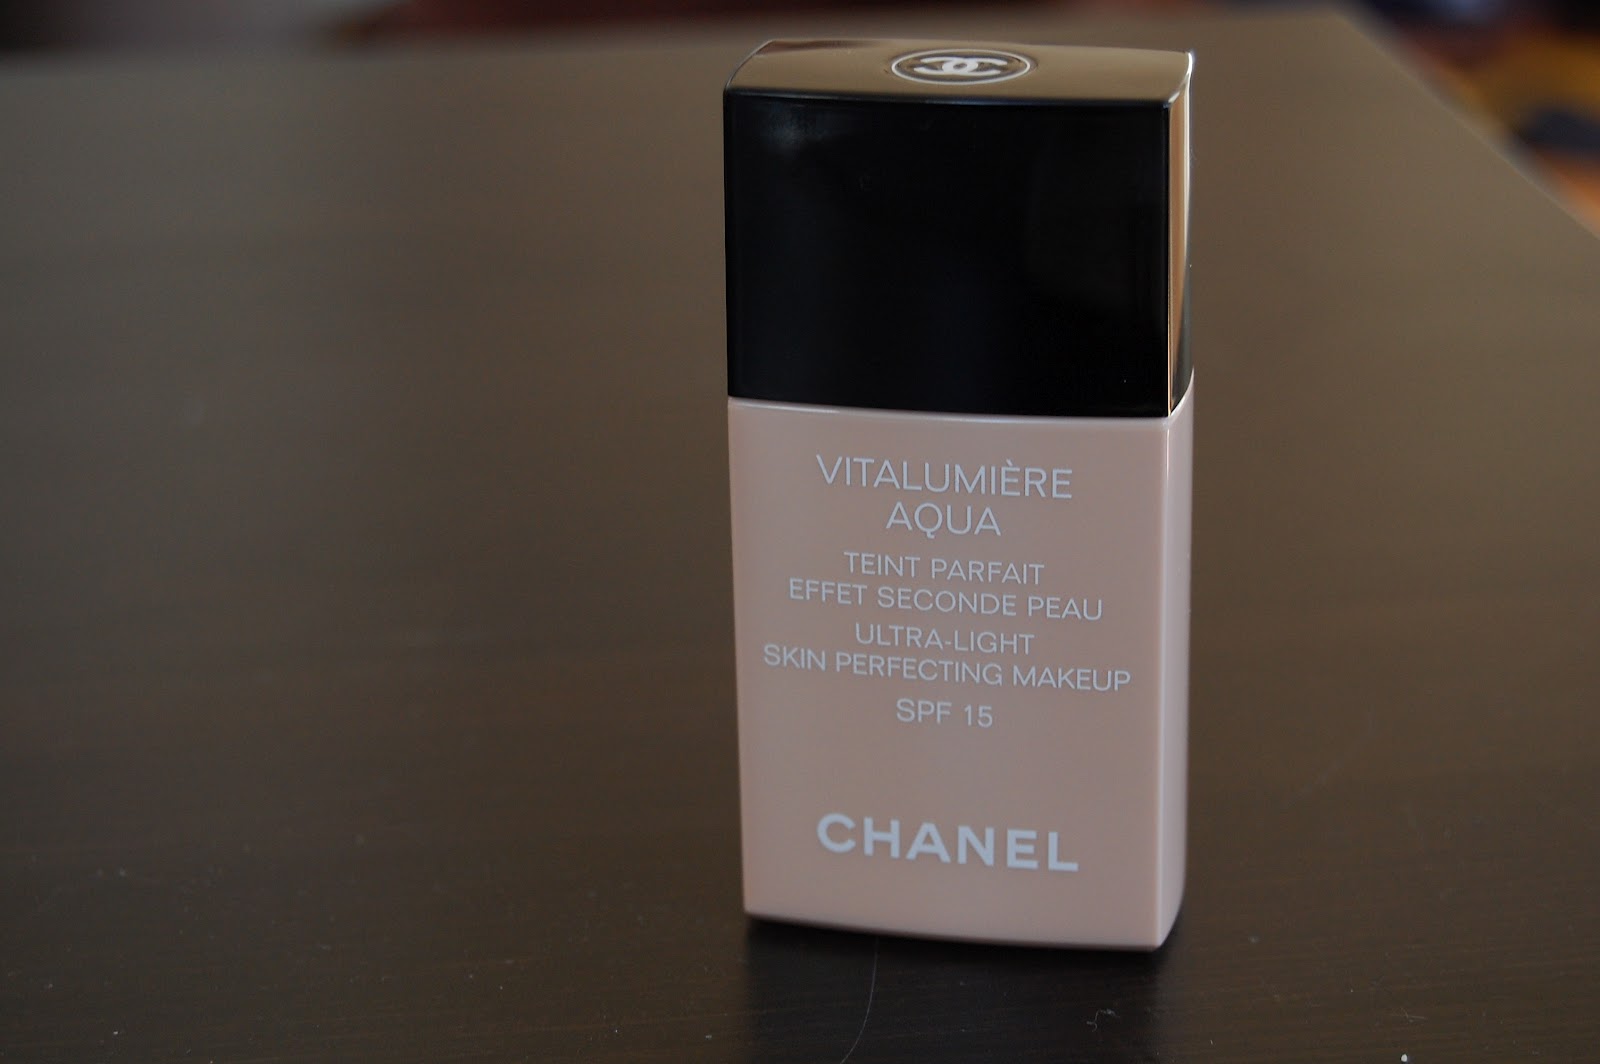 chelsea wears: Chanel Vitalumiére Aqua in BR12 / Beige Rosé